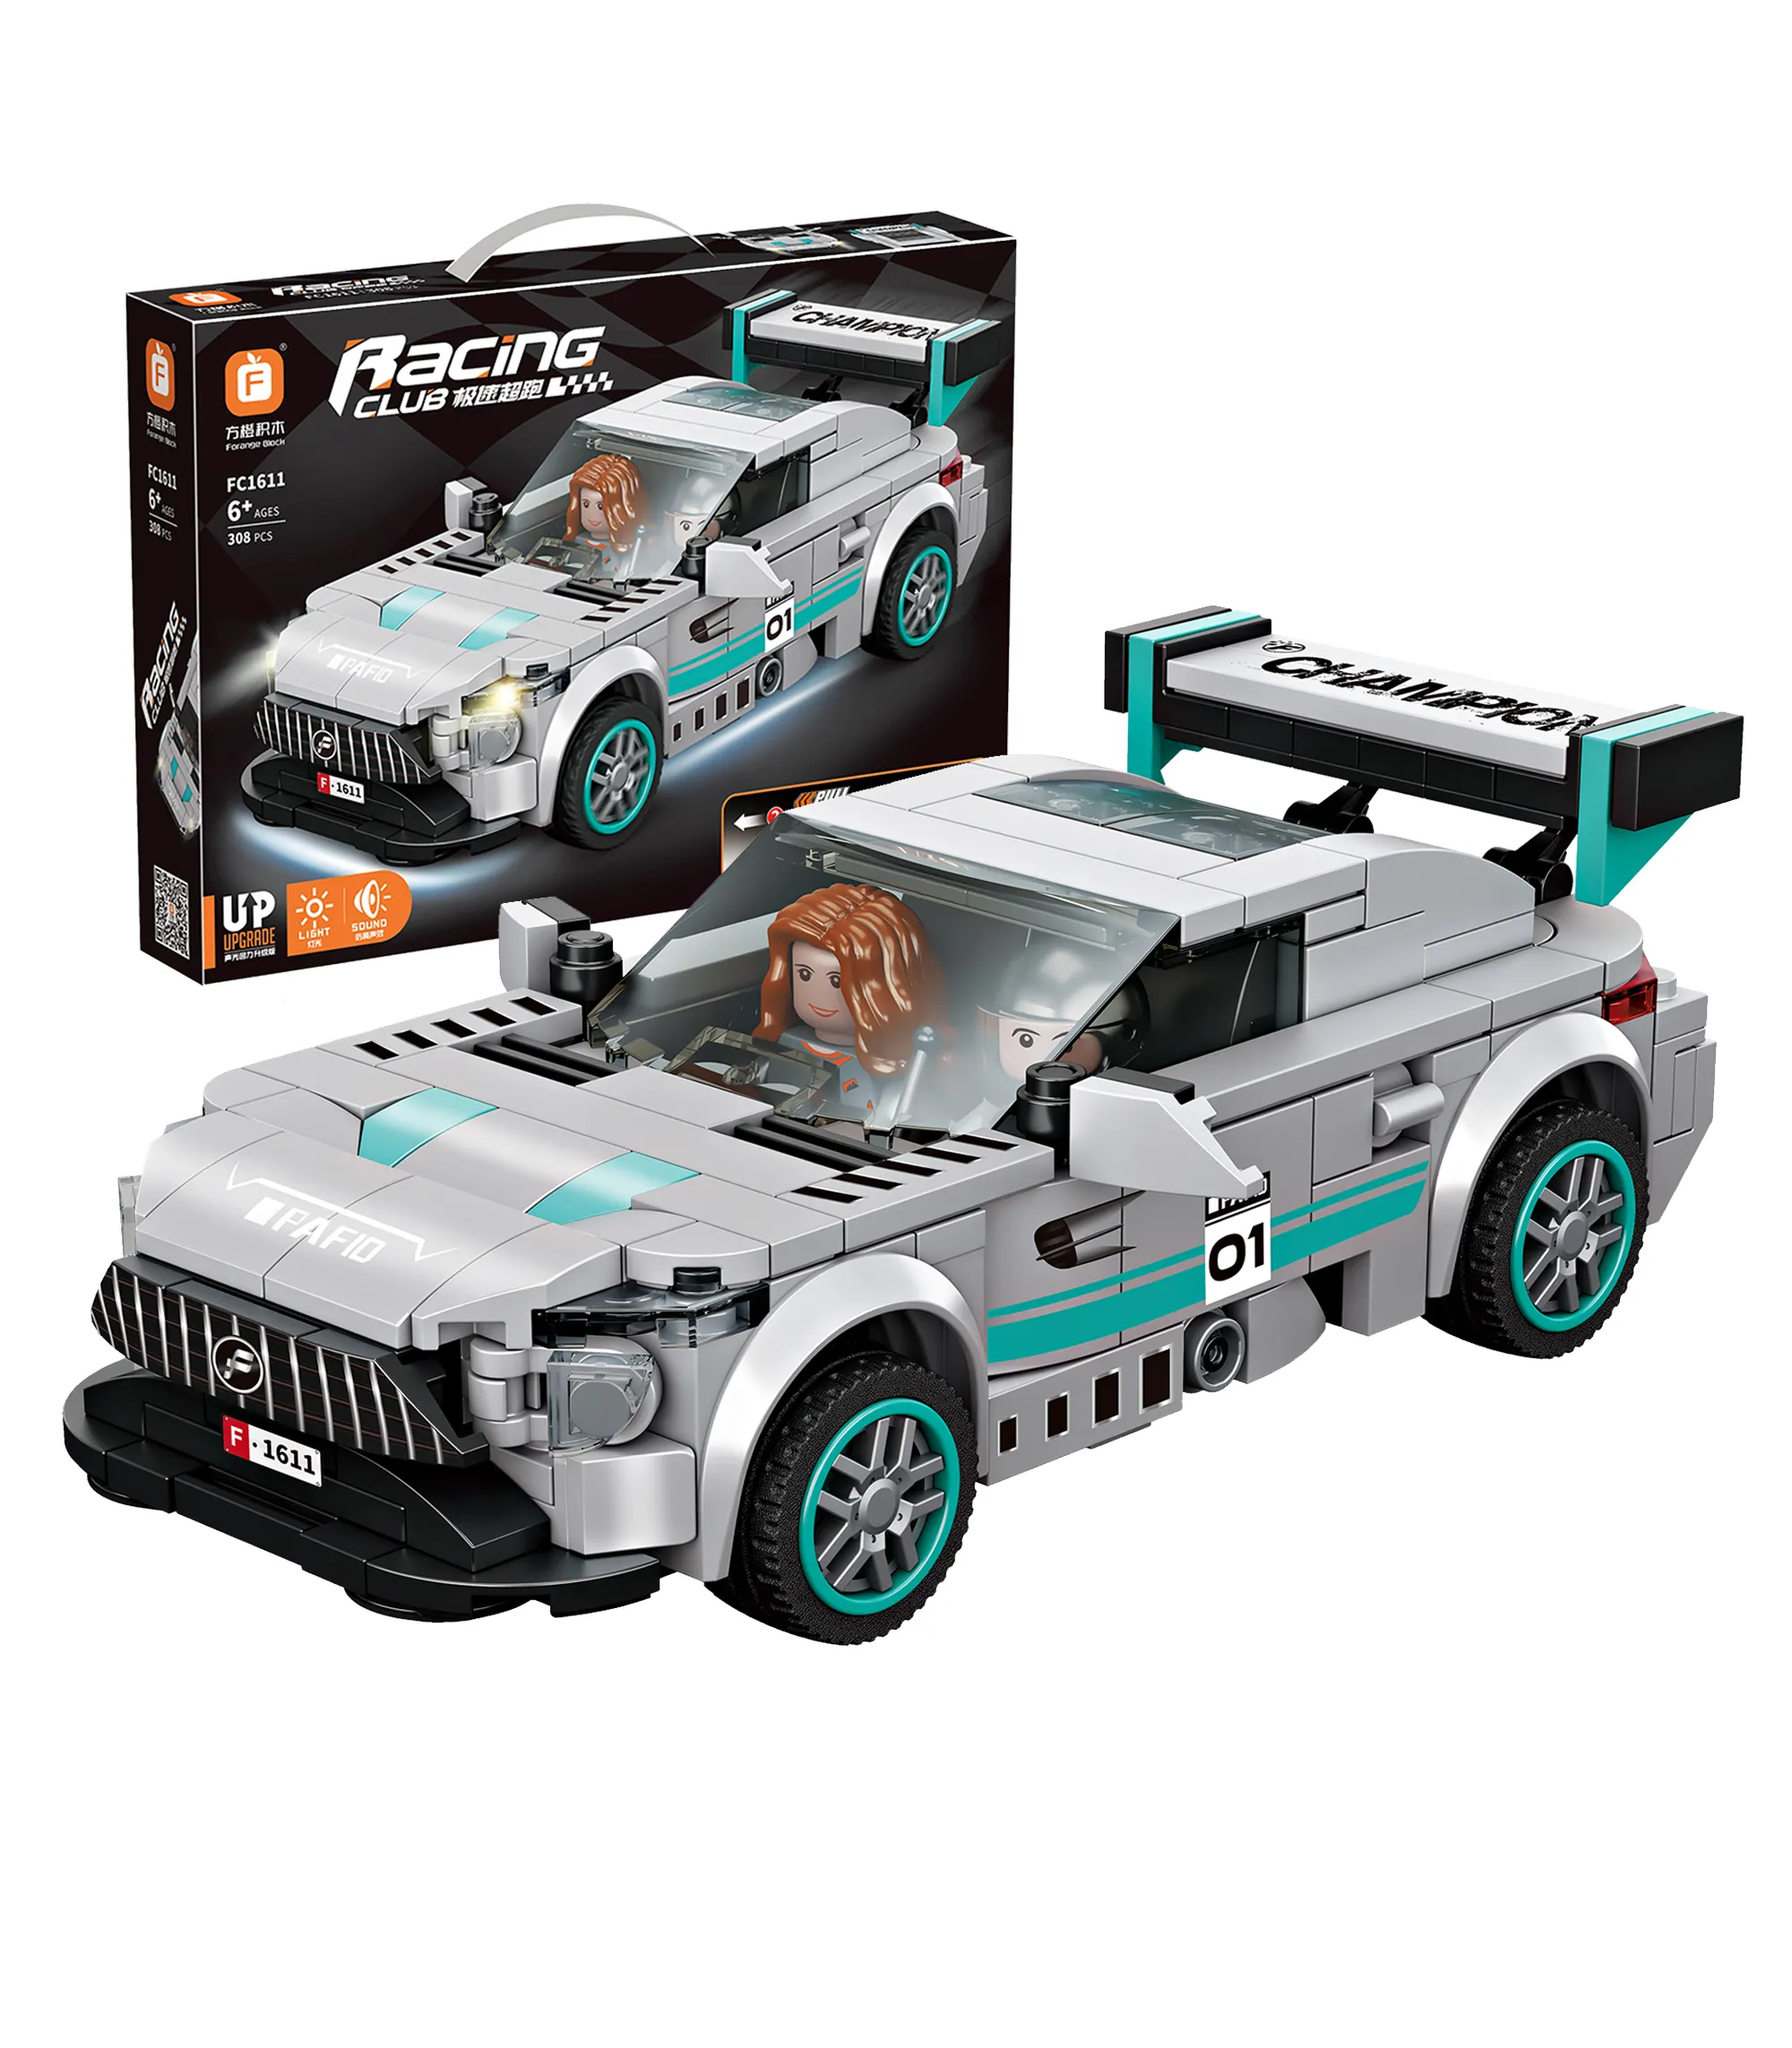 Tire hacia atrás coche deportivo GTR modelo ladrillo conjunto DIY construcción juguete adulto coleccionable hipercoche modelo Legoed carreras coche bloques de construcción